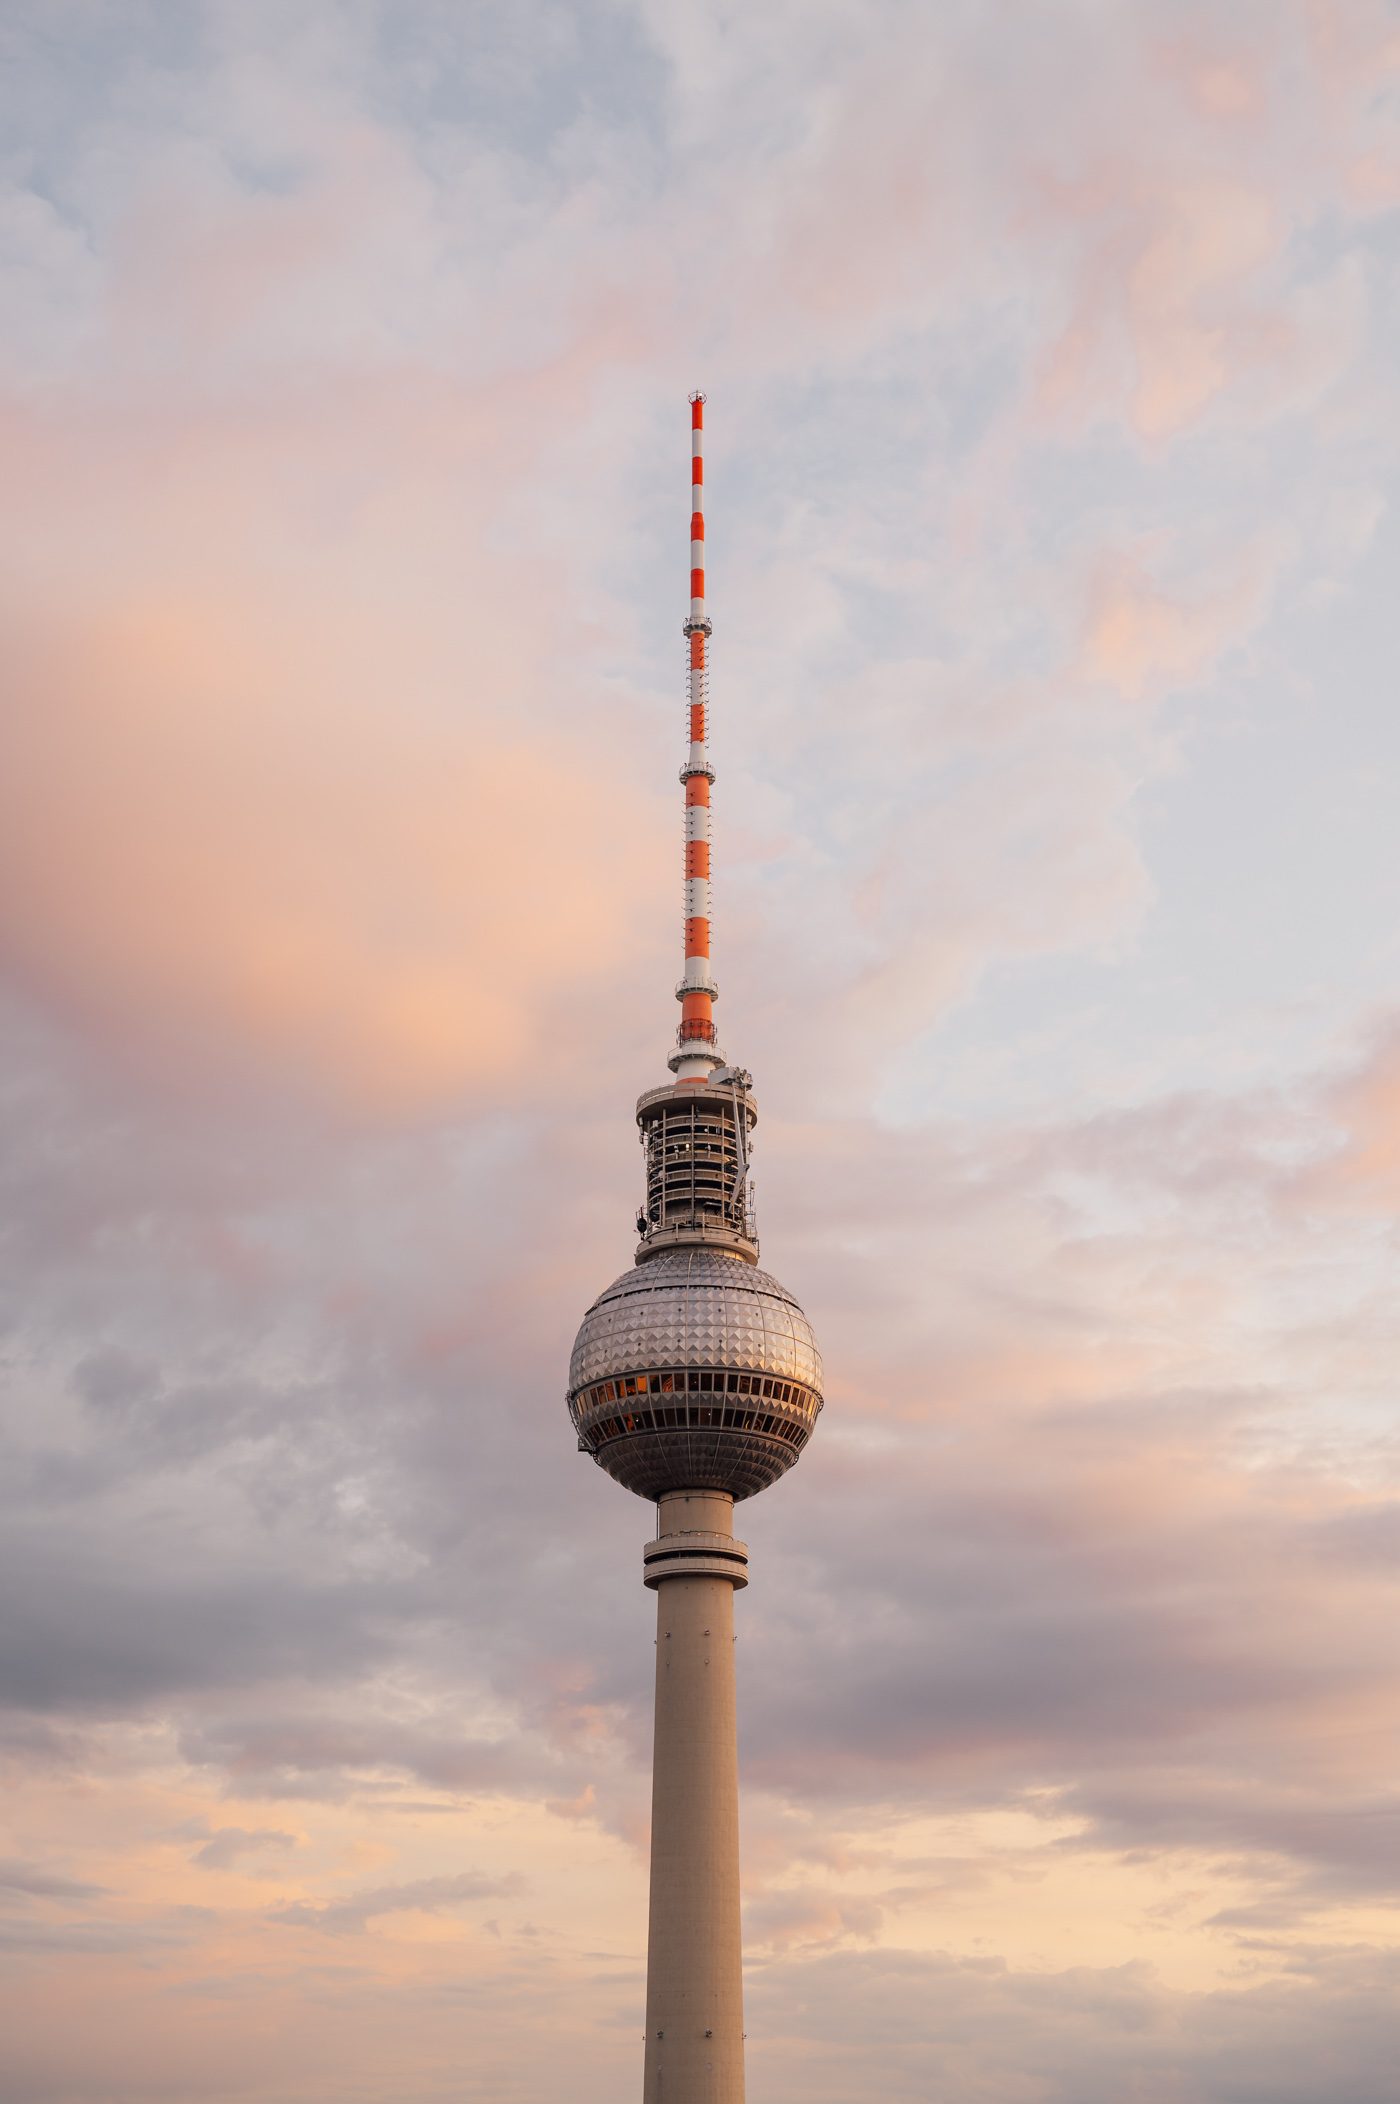 Berlin TV Tower at sunset - as seen from Park Inn Rooftop Terrace